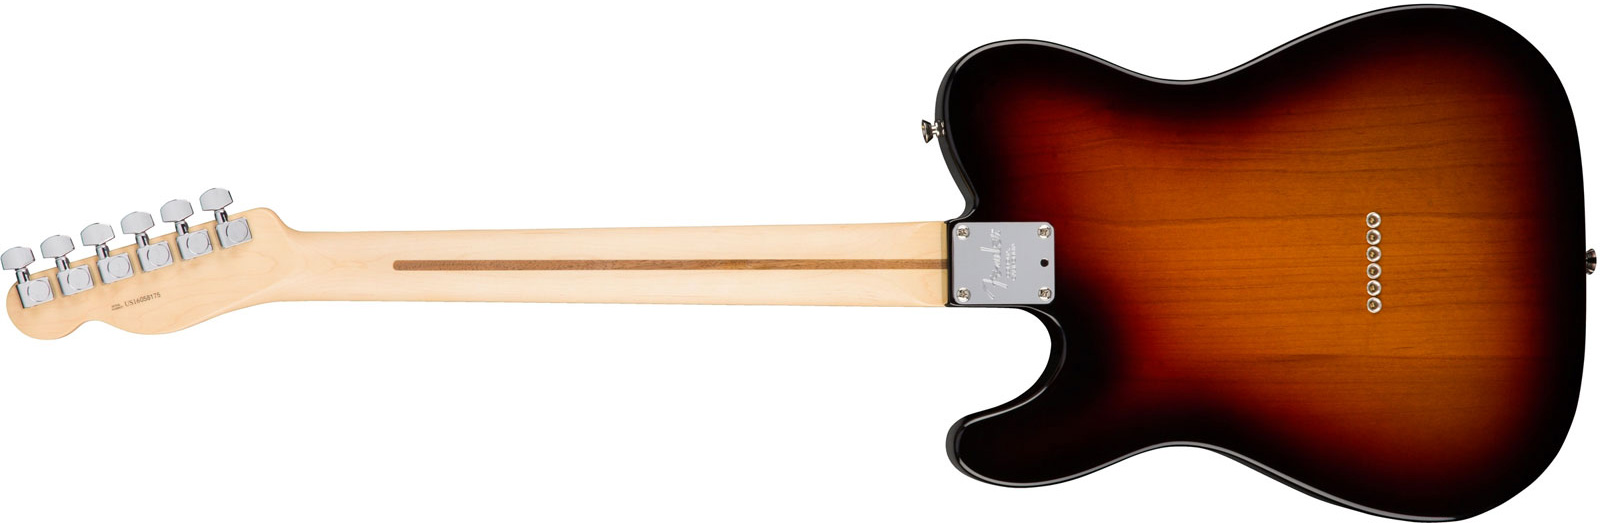 Fender Tele American Professional 2s Usa Mn - 3-color Sunburst - E-Gitarre in Teleform - Variation 2